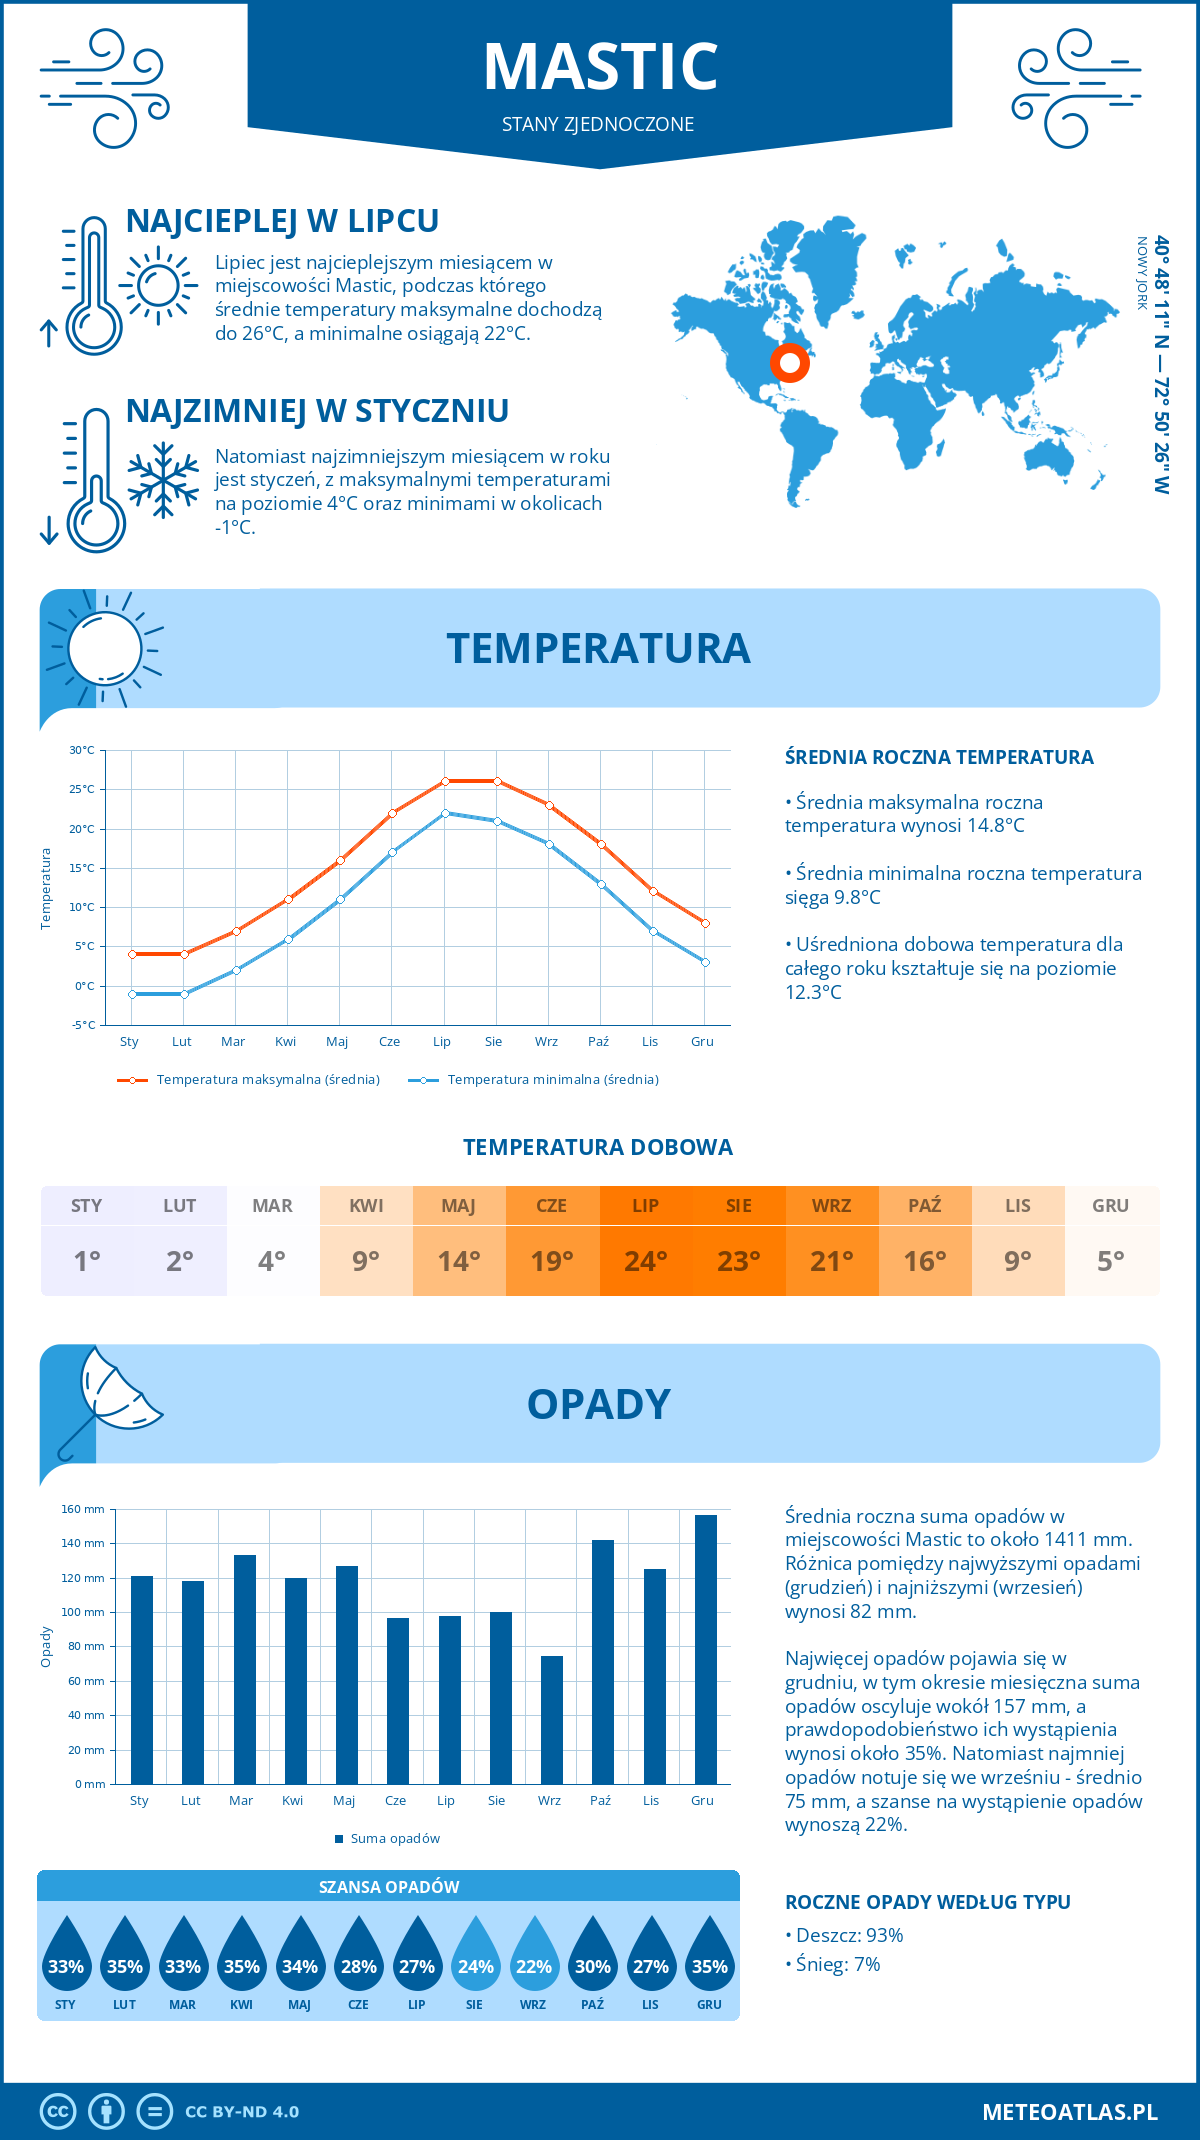 Pogoda Mastic (Stany Zjednoczone). Temperatura oraz opady.